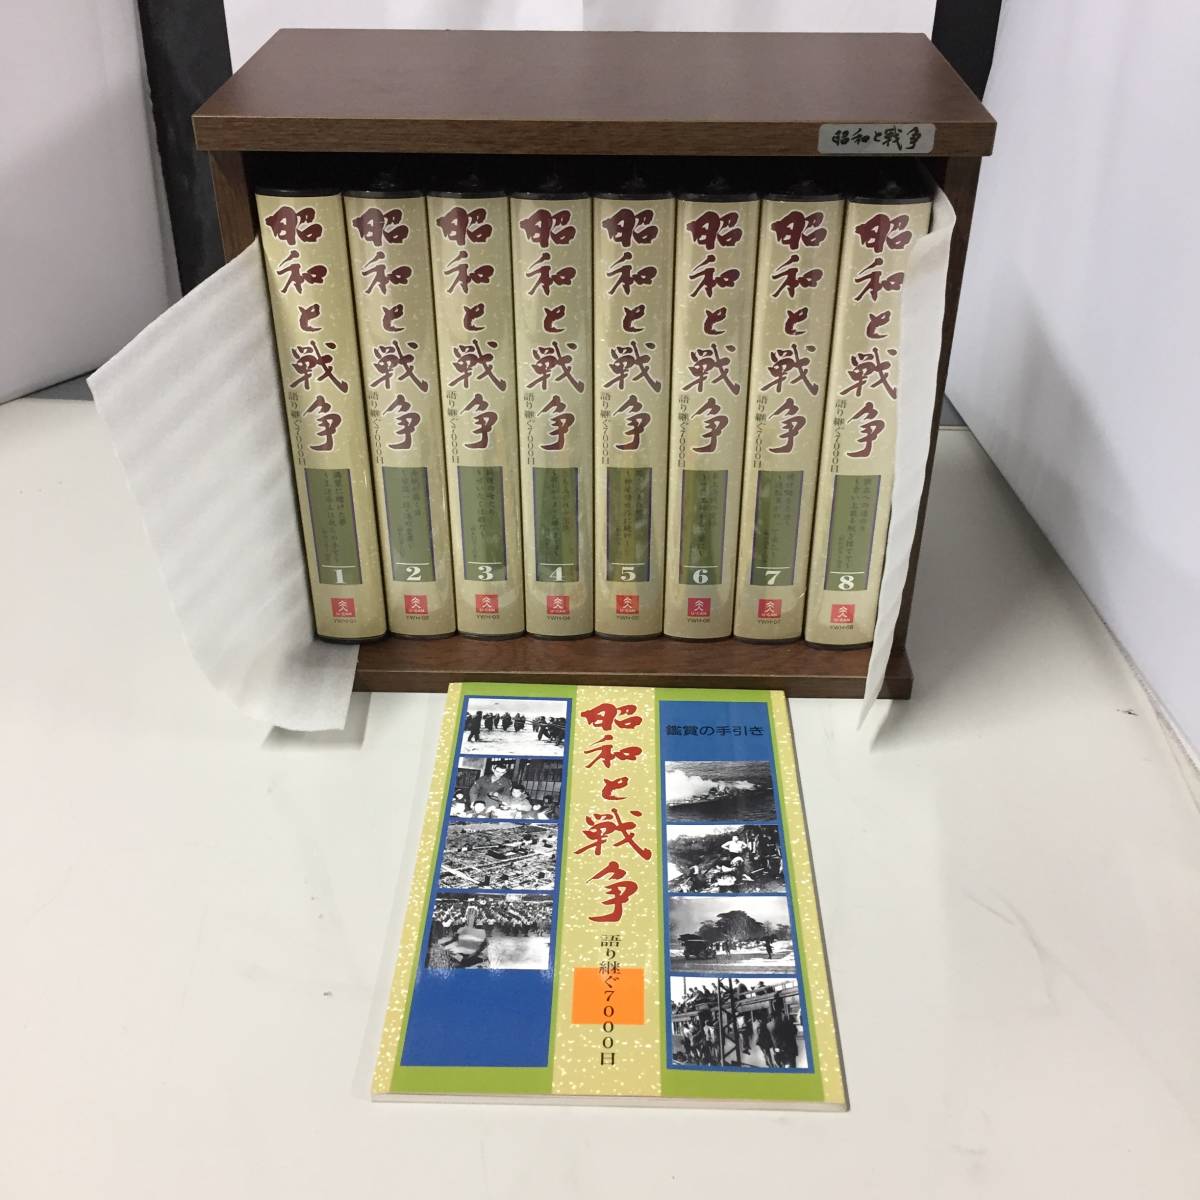 ヤフオク! - ○未開封多数 VHS 昭和と戦争 全8巻 セット 専用収納